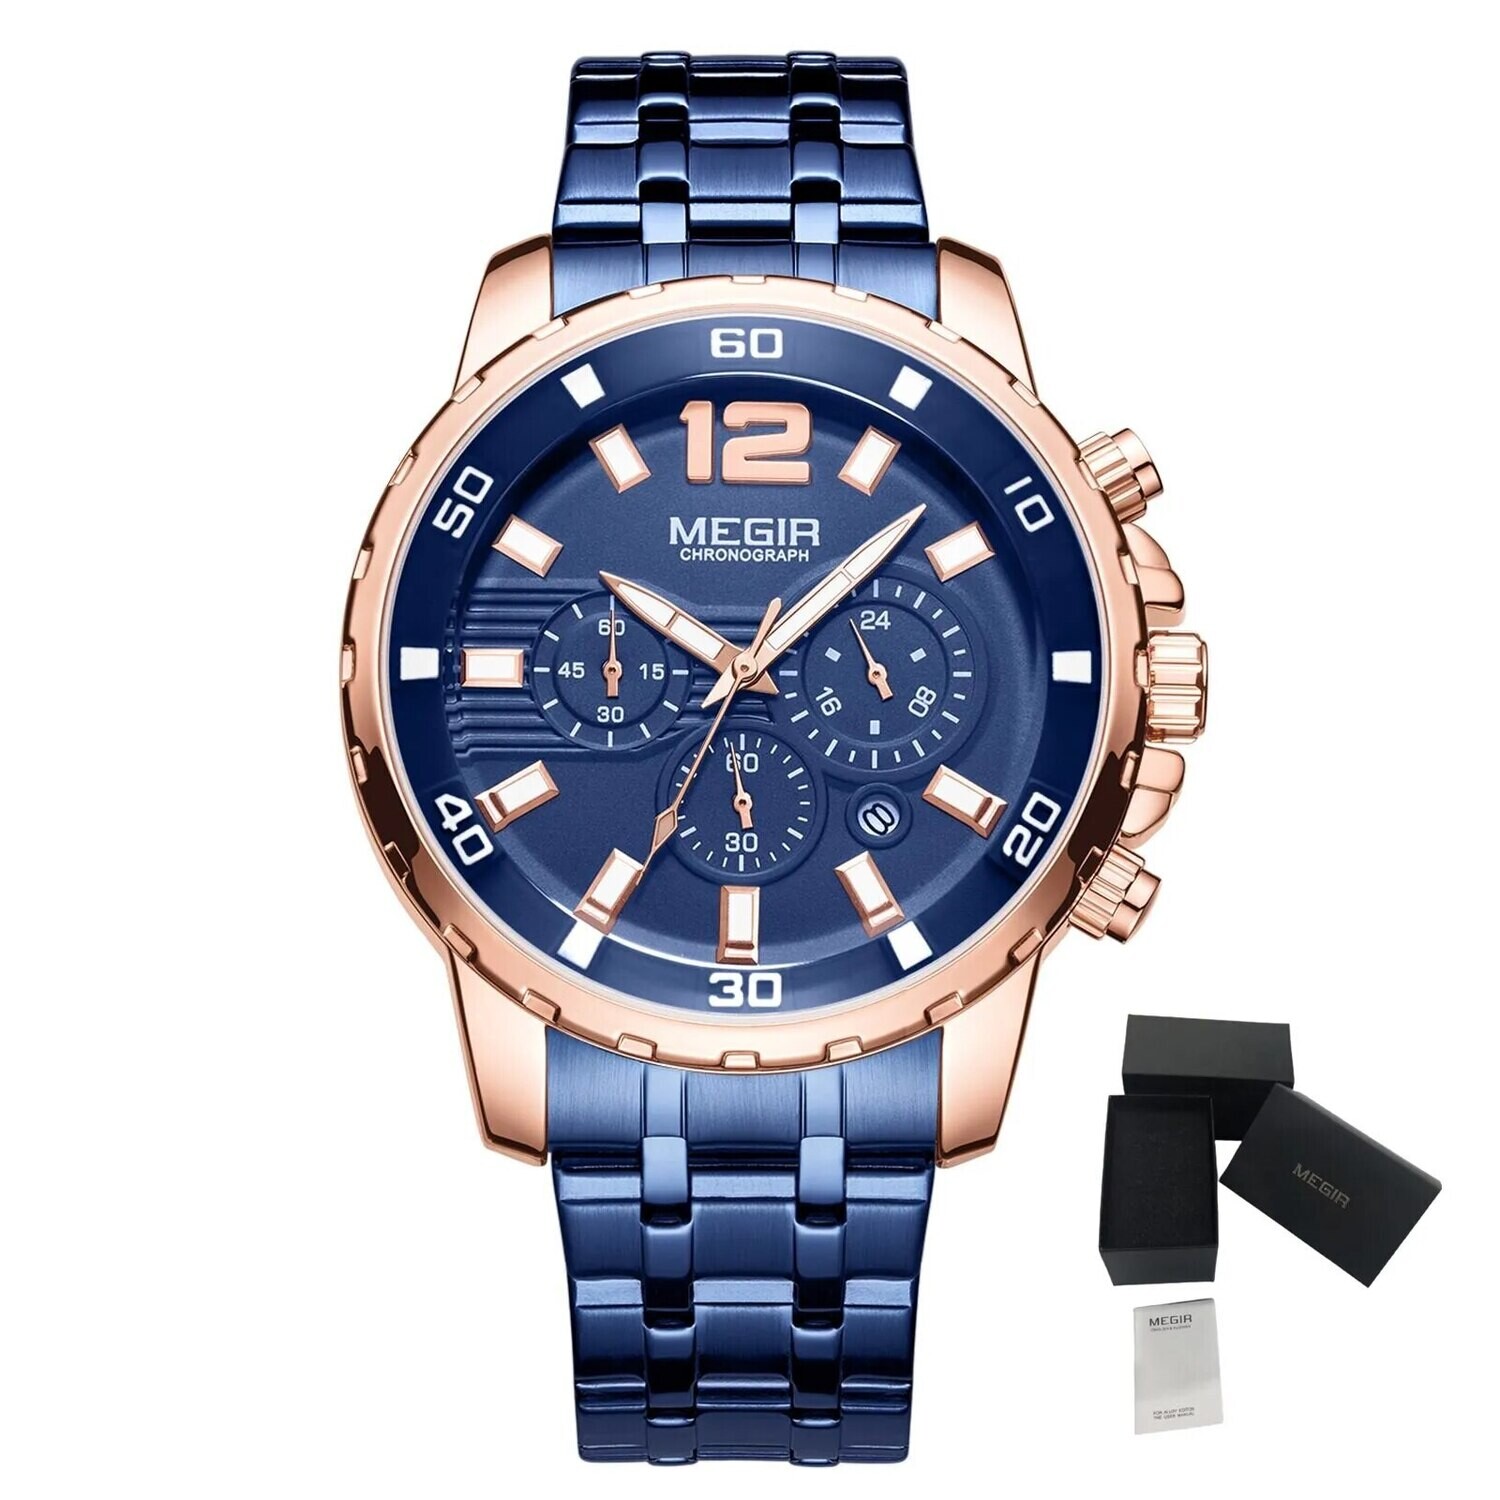 MEGIR Chronograph Quartz Men Watch Top Brand Luxury Military Wrist Watches Clock Men Relogio Masculino Business Wristwatch